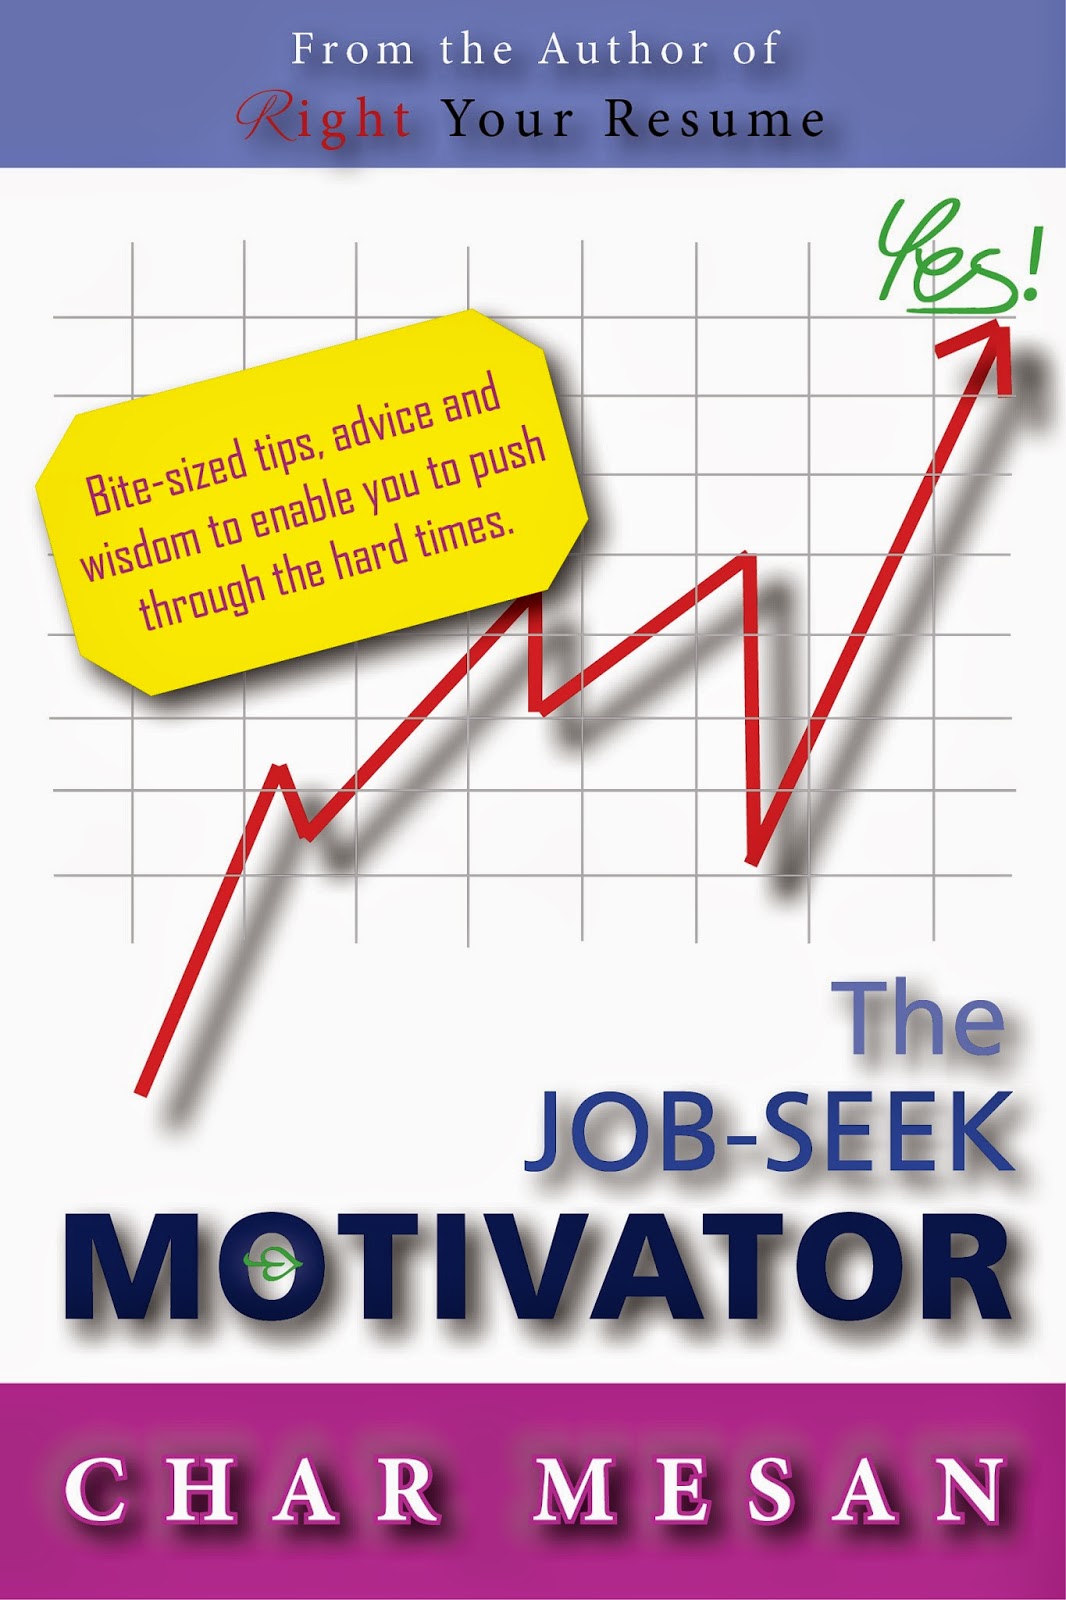 <a href="http://www.amazon.com/gp/offer-listing/B00R7V9PKQ/ref=as_li_tl?ie=UTF8&camp=1789&creative=9325&creativeASIN=B00R7V9PKQ&linkCode=am2&tag=chameswri-20&linkId=EEUJSFYHNXTFWQRA">The Job-Seek Motivator: Bite-sized tips, advice and wisdom to enable you to push through the hard times</a><img src="http://ir-na.amazon-adsystem.com/e/ir?t=chameswri-20&l=am2&o=1&a=B00R7V9PKQ" width="1" height="1" border="0" alt="" style="border:none !important; margin:0px !important;" />